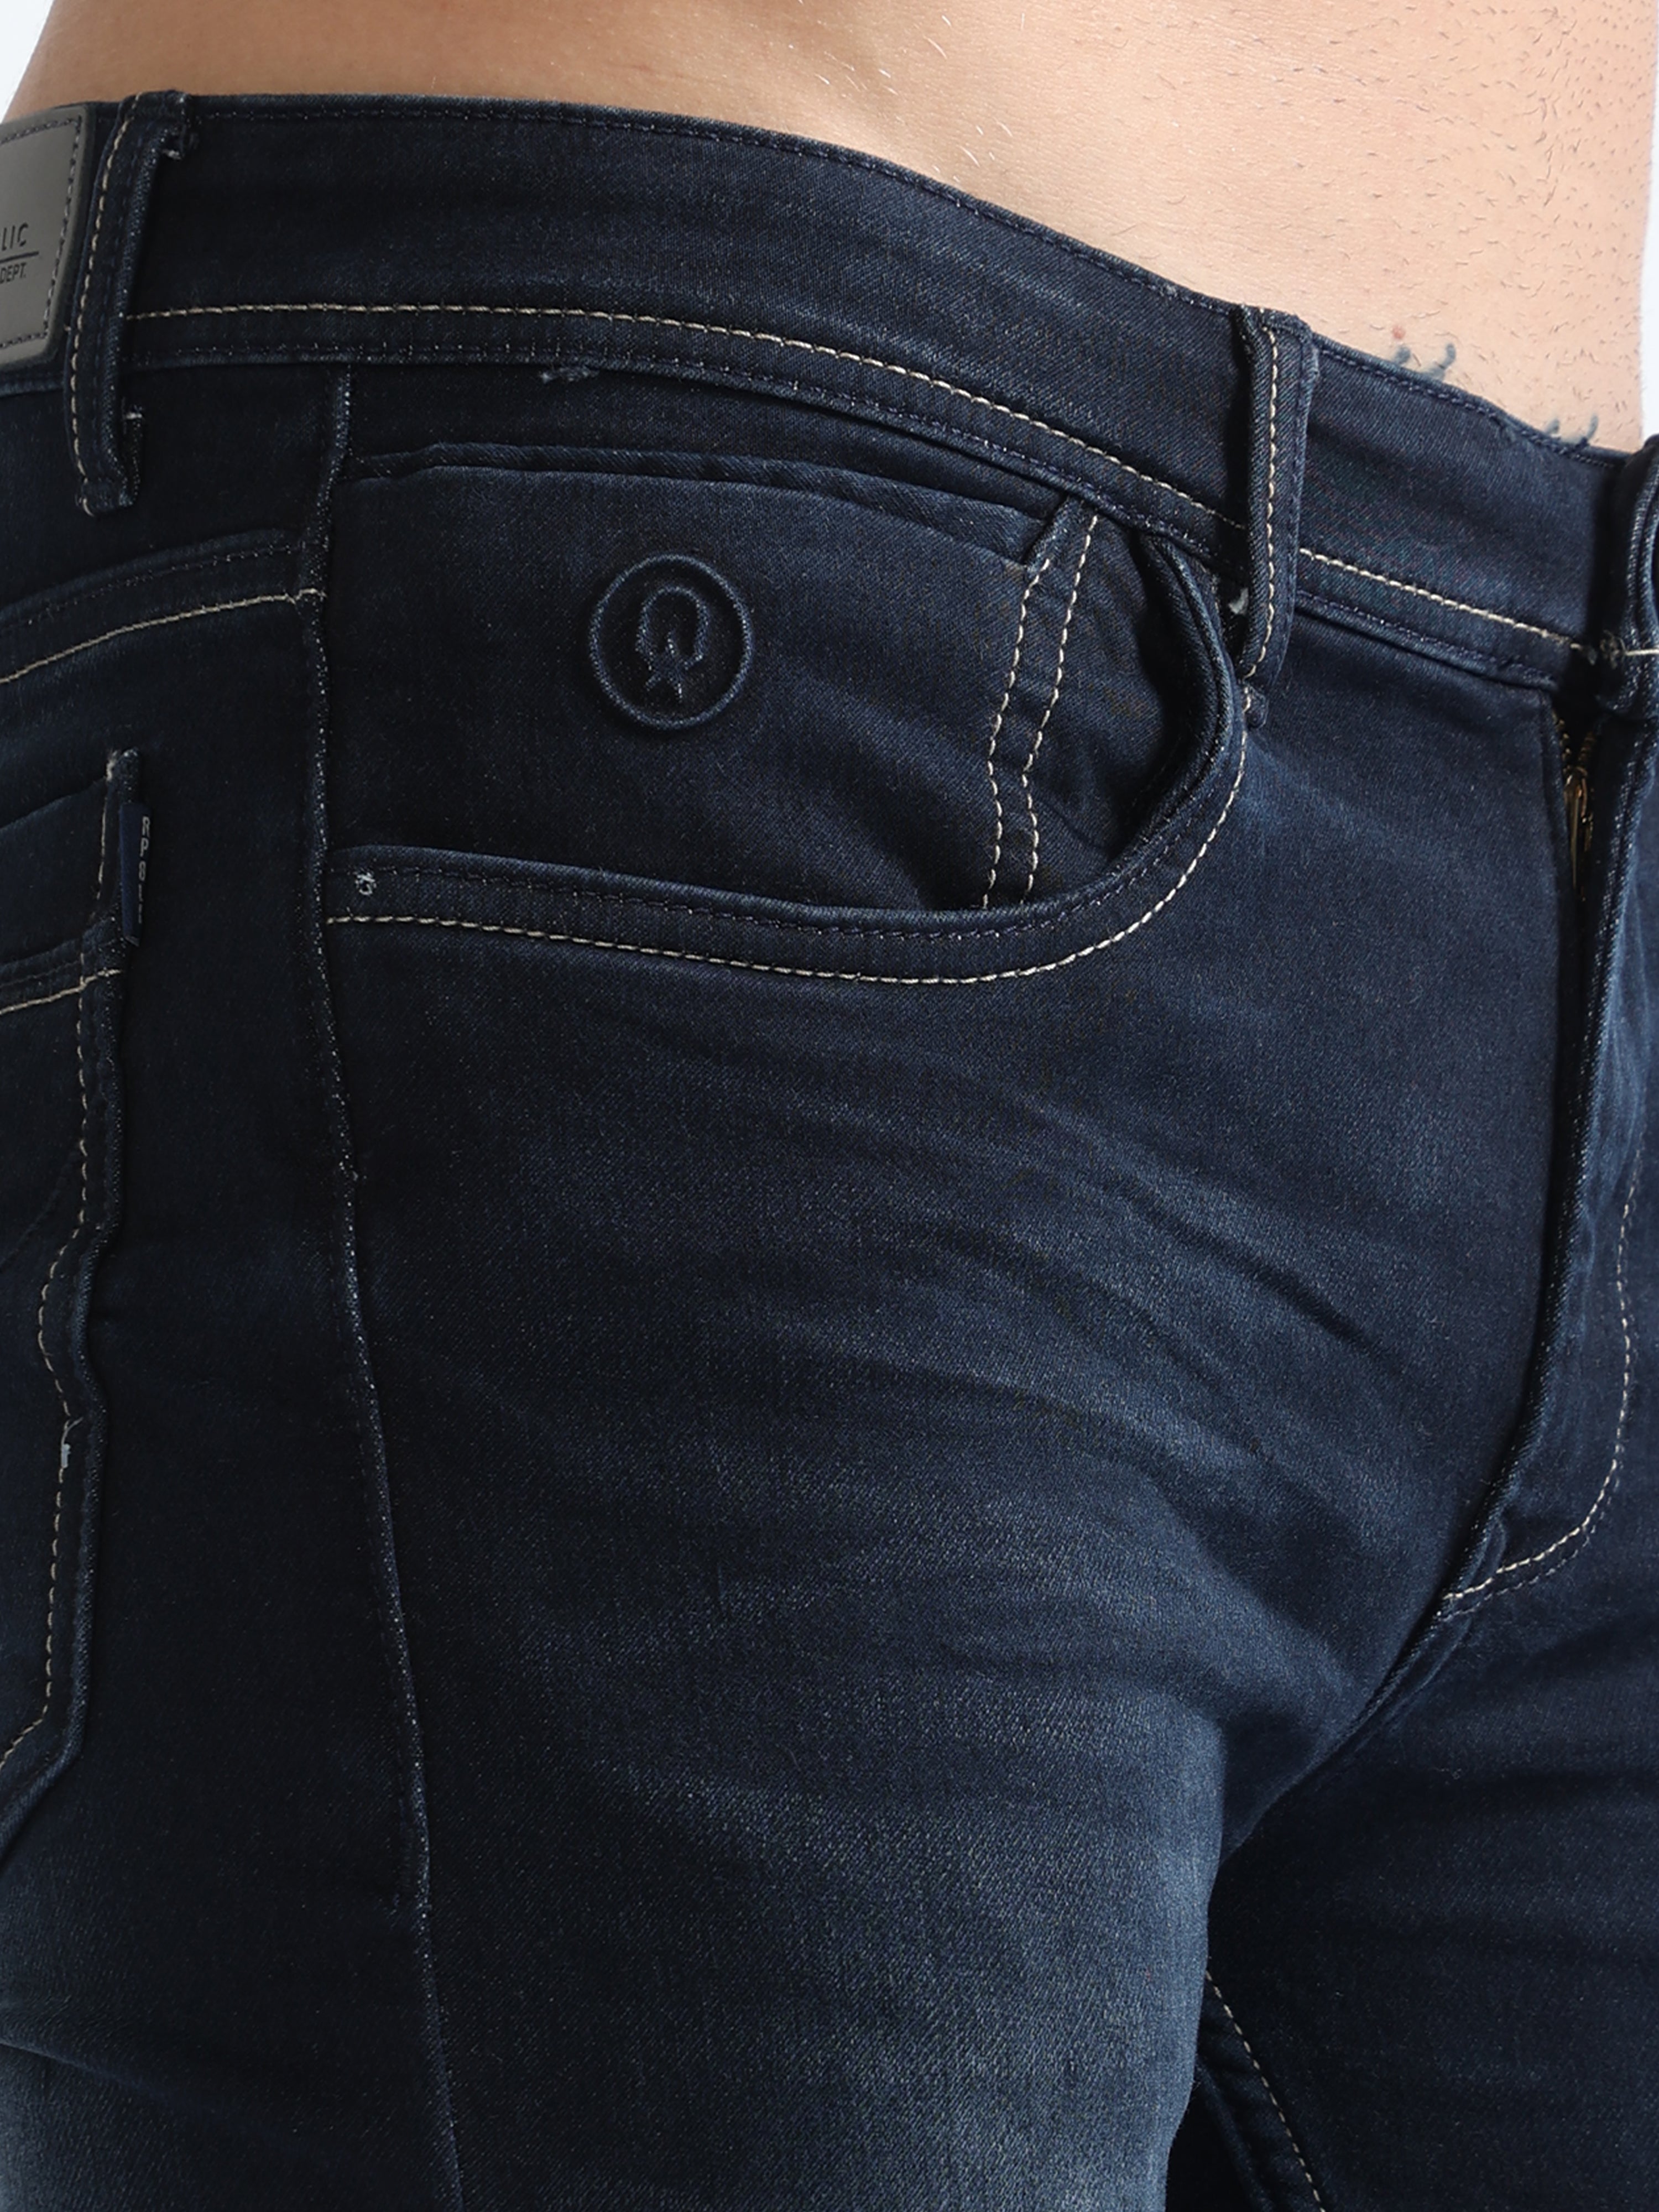 Suko jeans Men's Classic Five-Pocket Stretch Denim Short – Roadrunner Jeans  Apparel